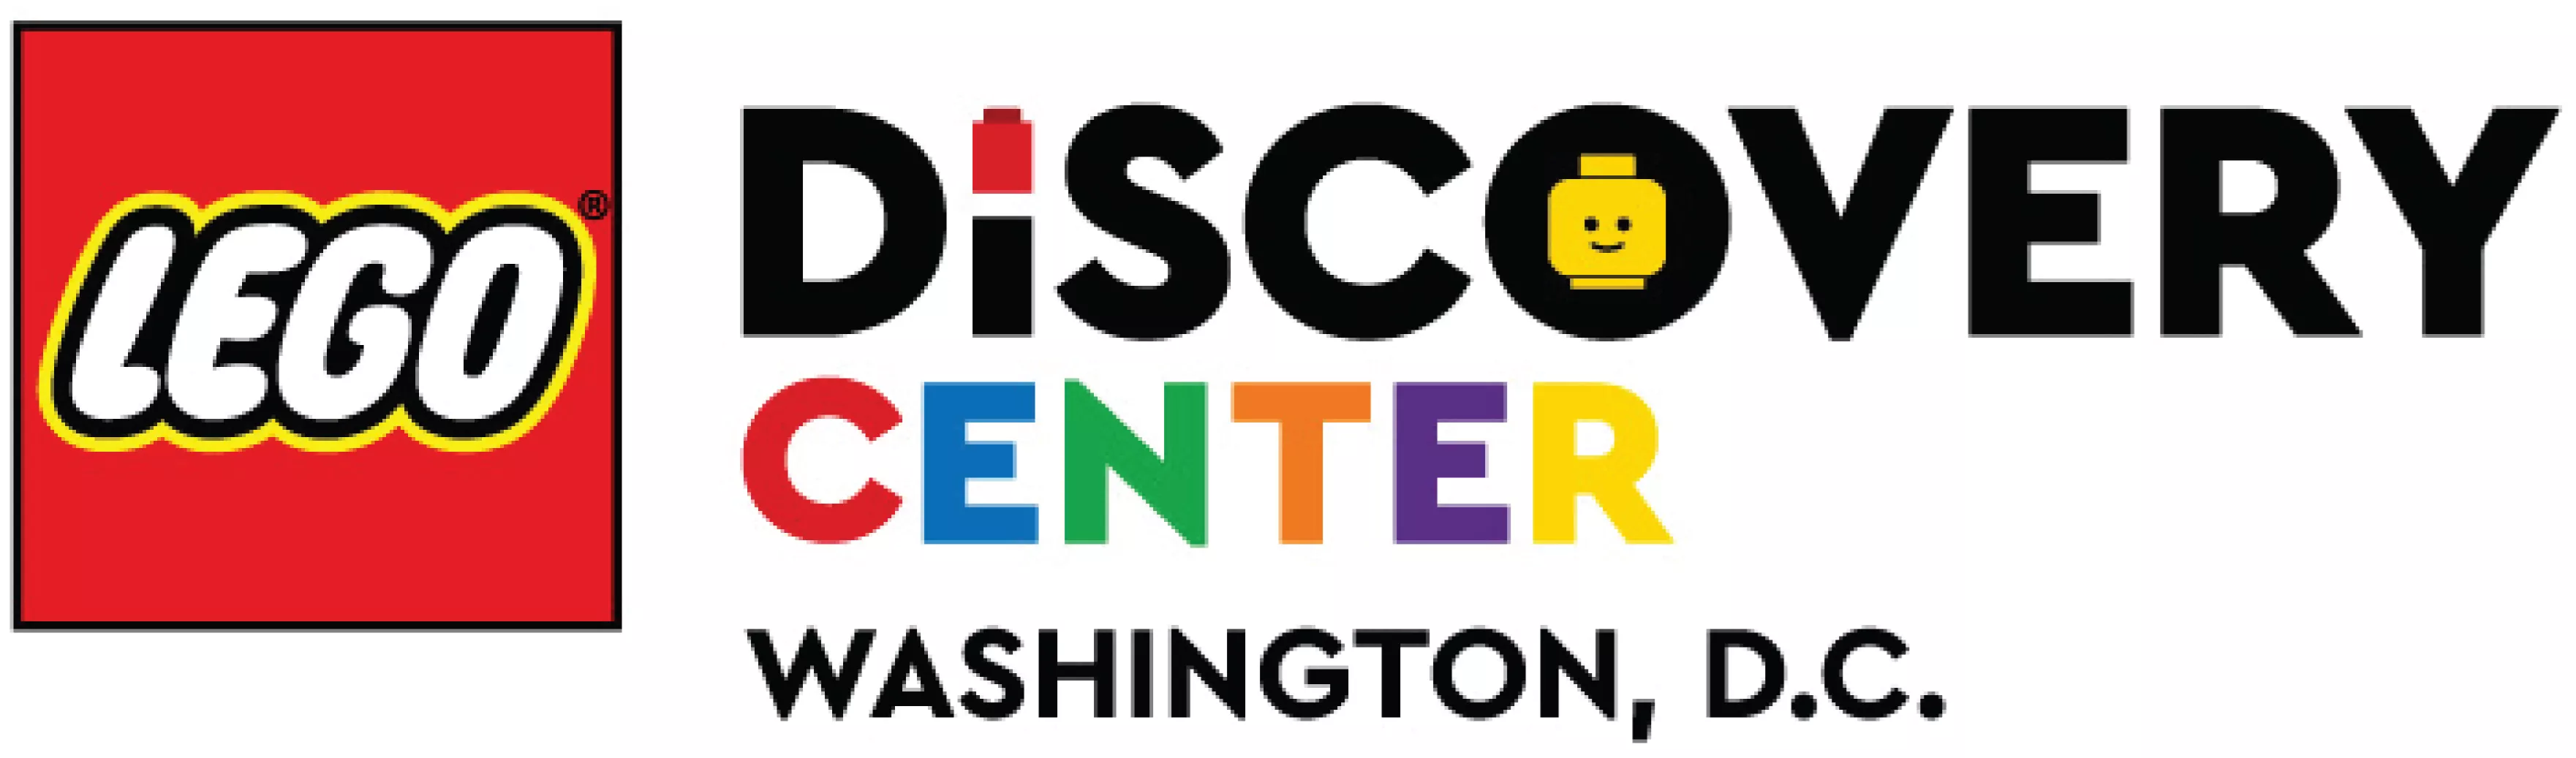 LDC Washington DC logo